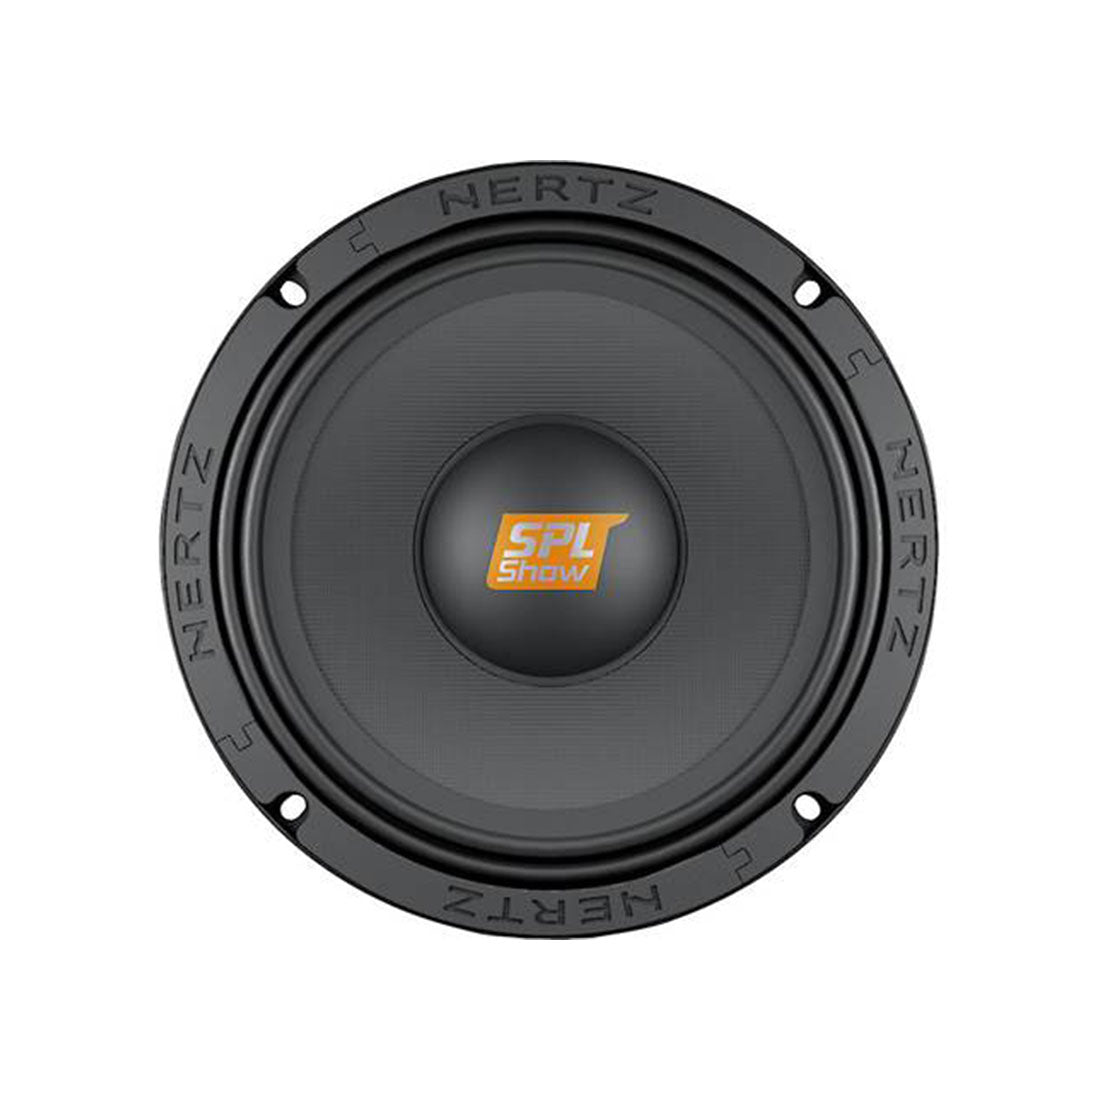 Hertz SV165.1 SPL Show Series 6.5" Midrange Speakers